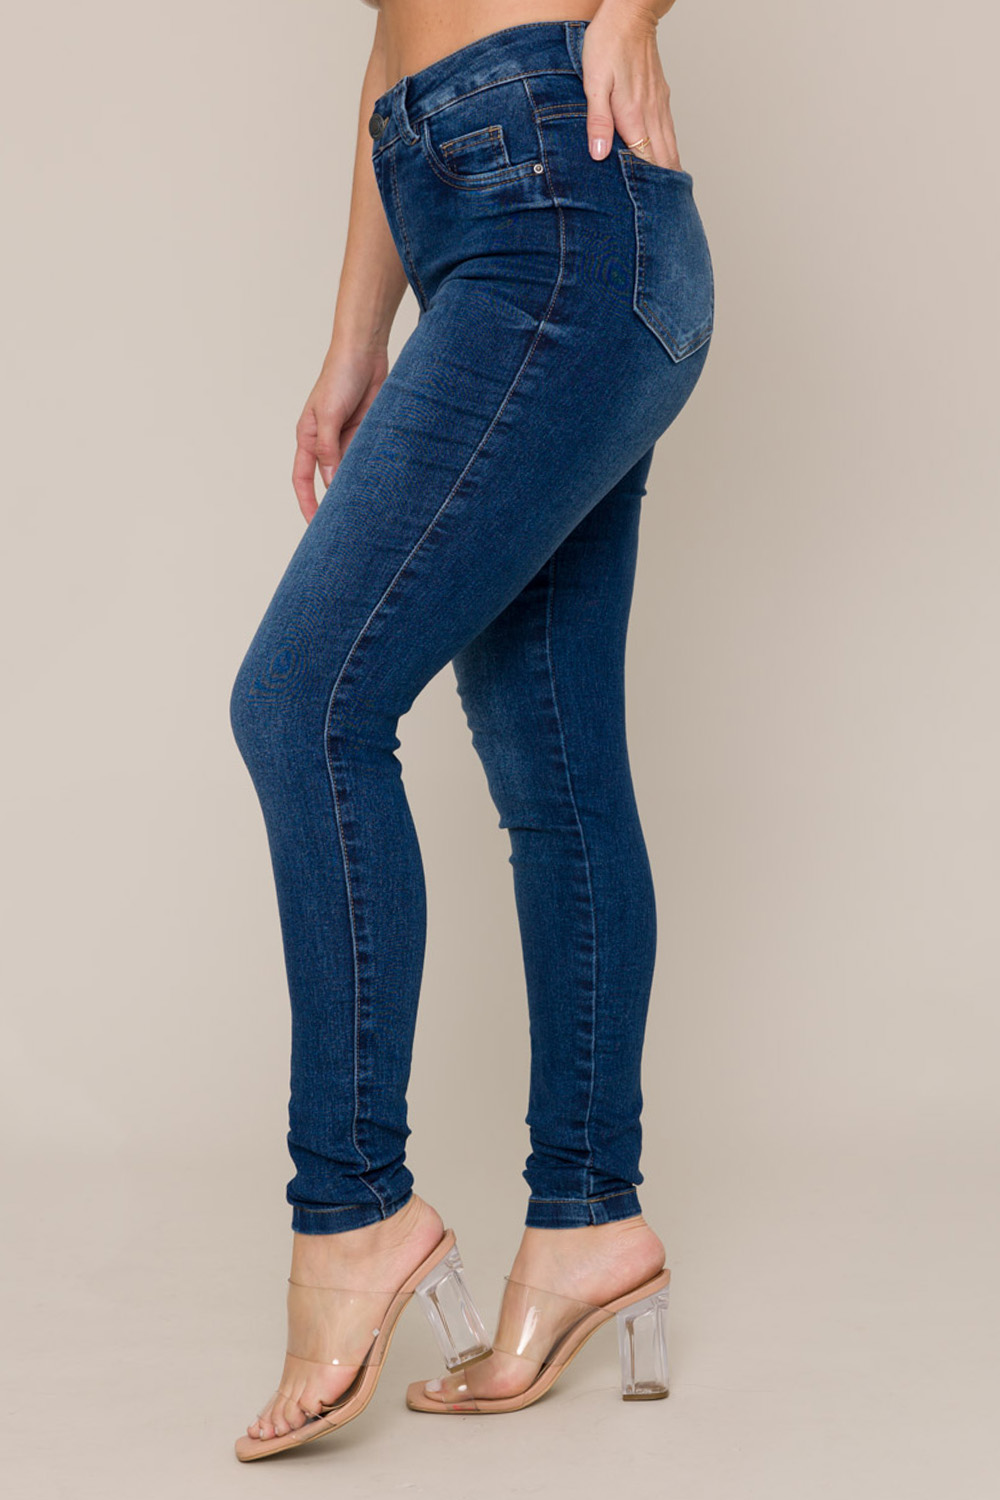 Calça Skinny Basic 11719 - Jeans Médio 3